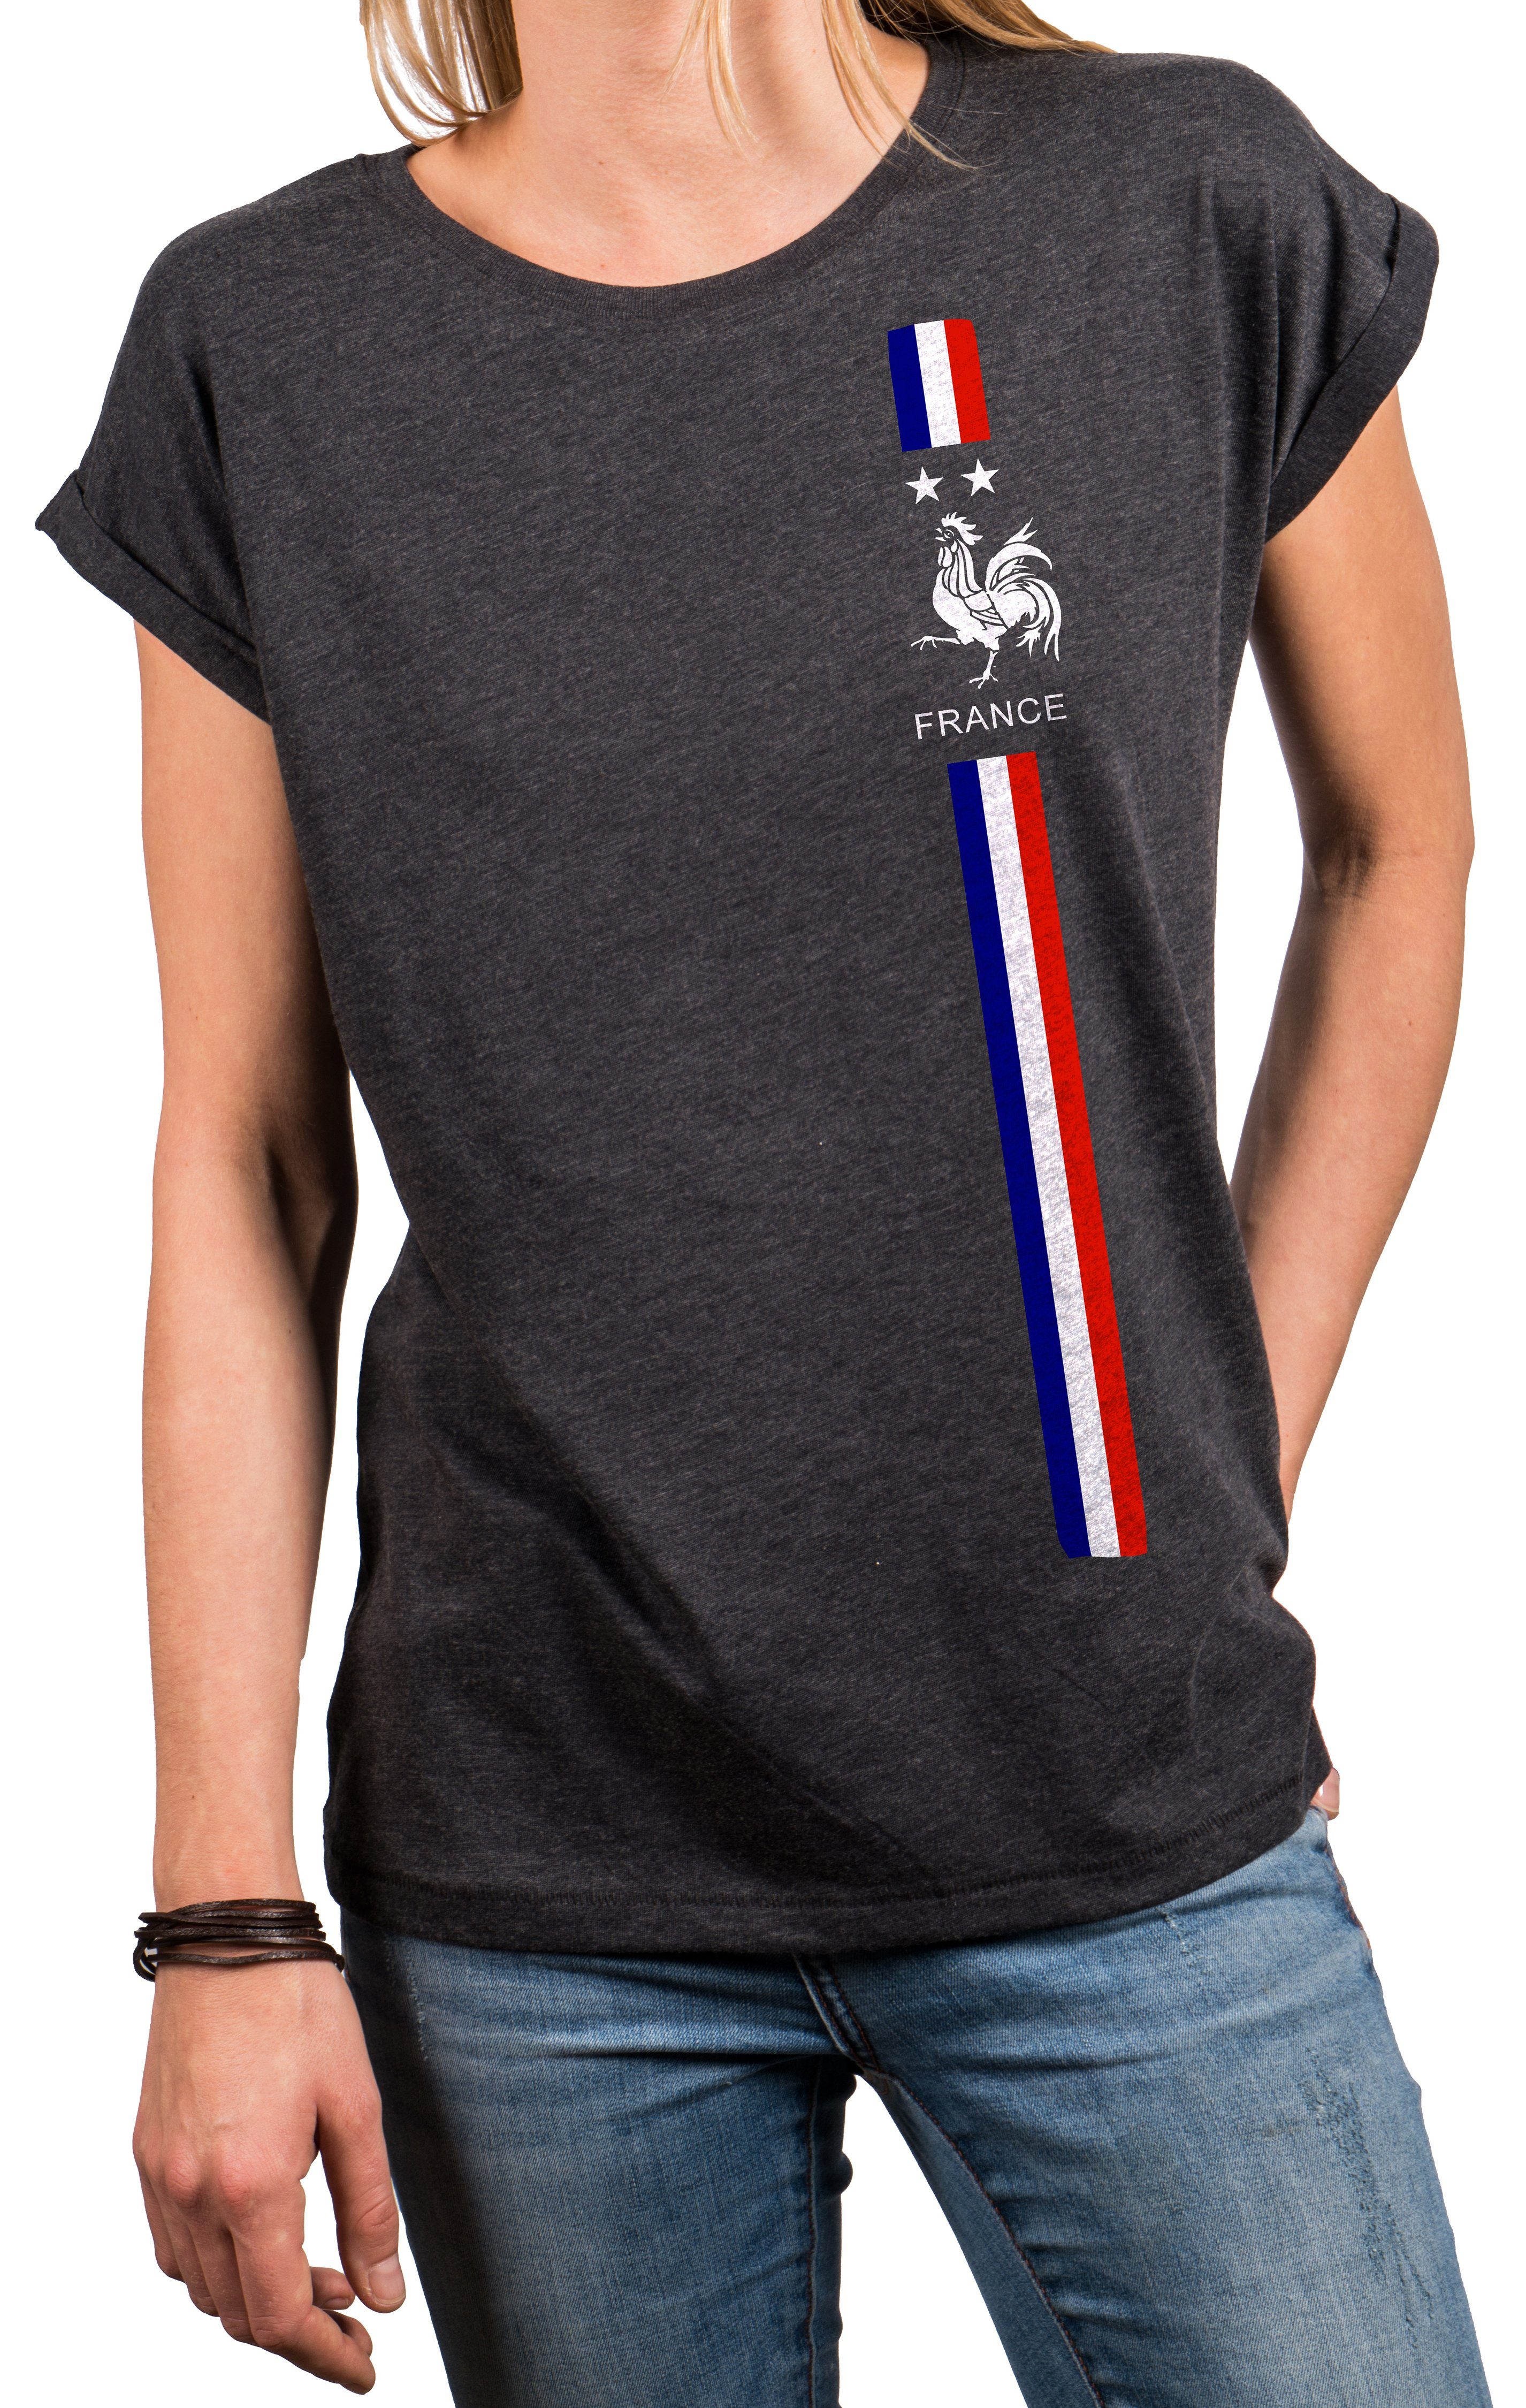 MAKAYA Print-Shirt Damen Kurzarmshirt Baumwolle Frankreich Fahne Flagge Trikot Top Tunika, große Größen Grau